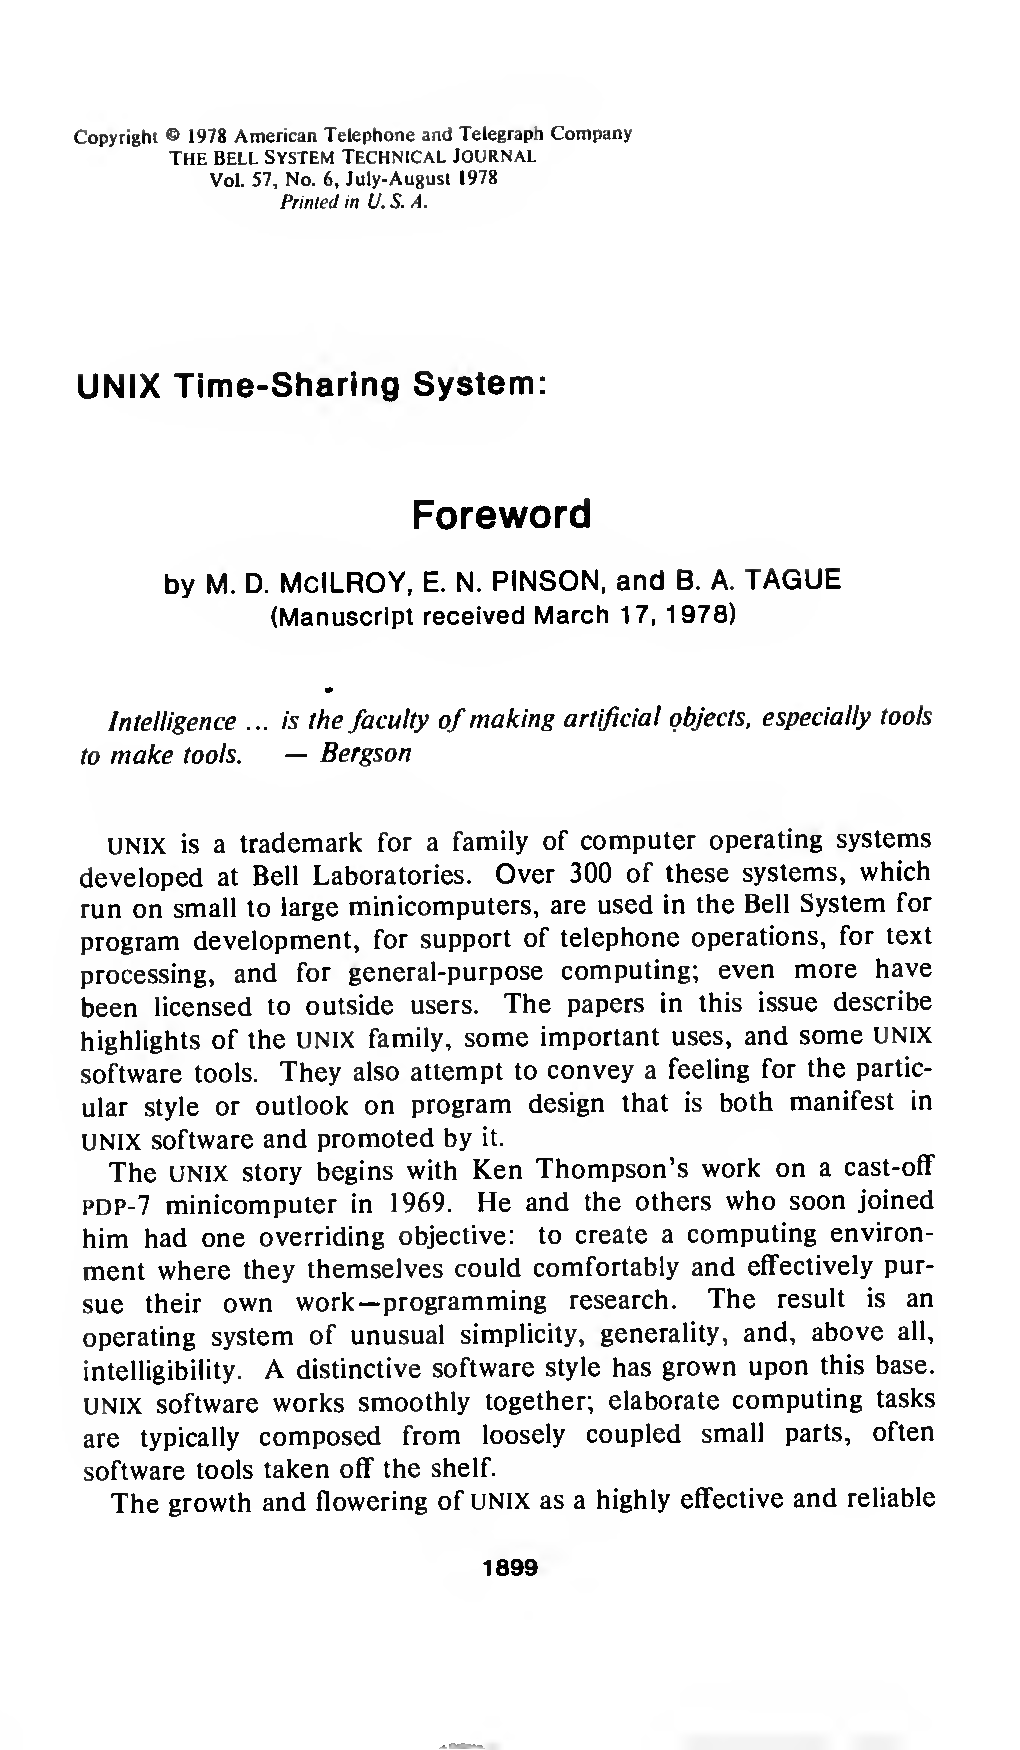 BSTJ 57: 6. July-August 1978: UNIX Time-Sharing System: Forward. (Mcilroy, M.D.; Pinson, E.N.; Tague, B.A.)